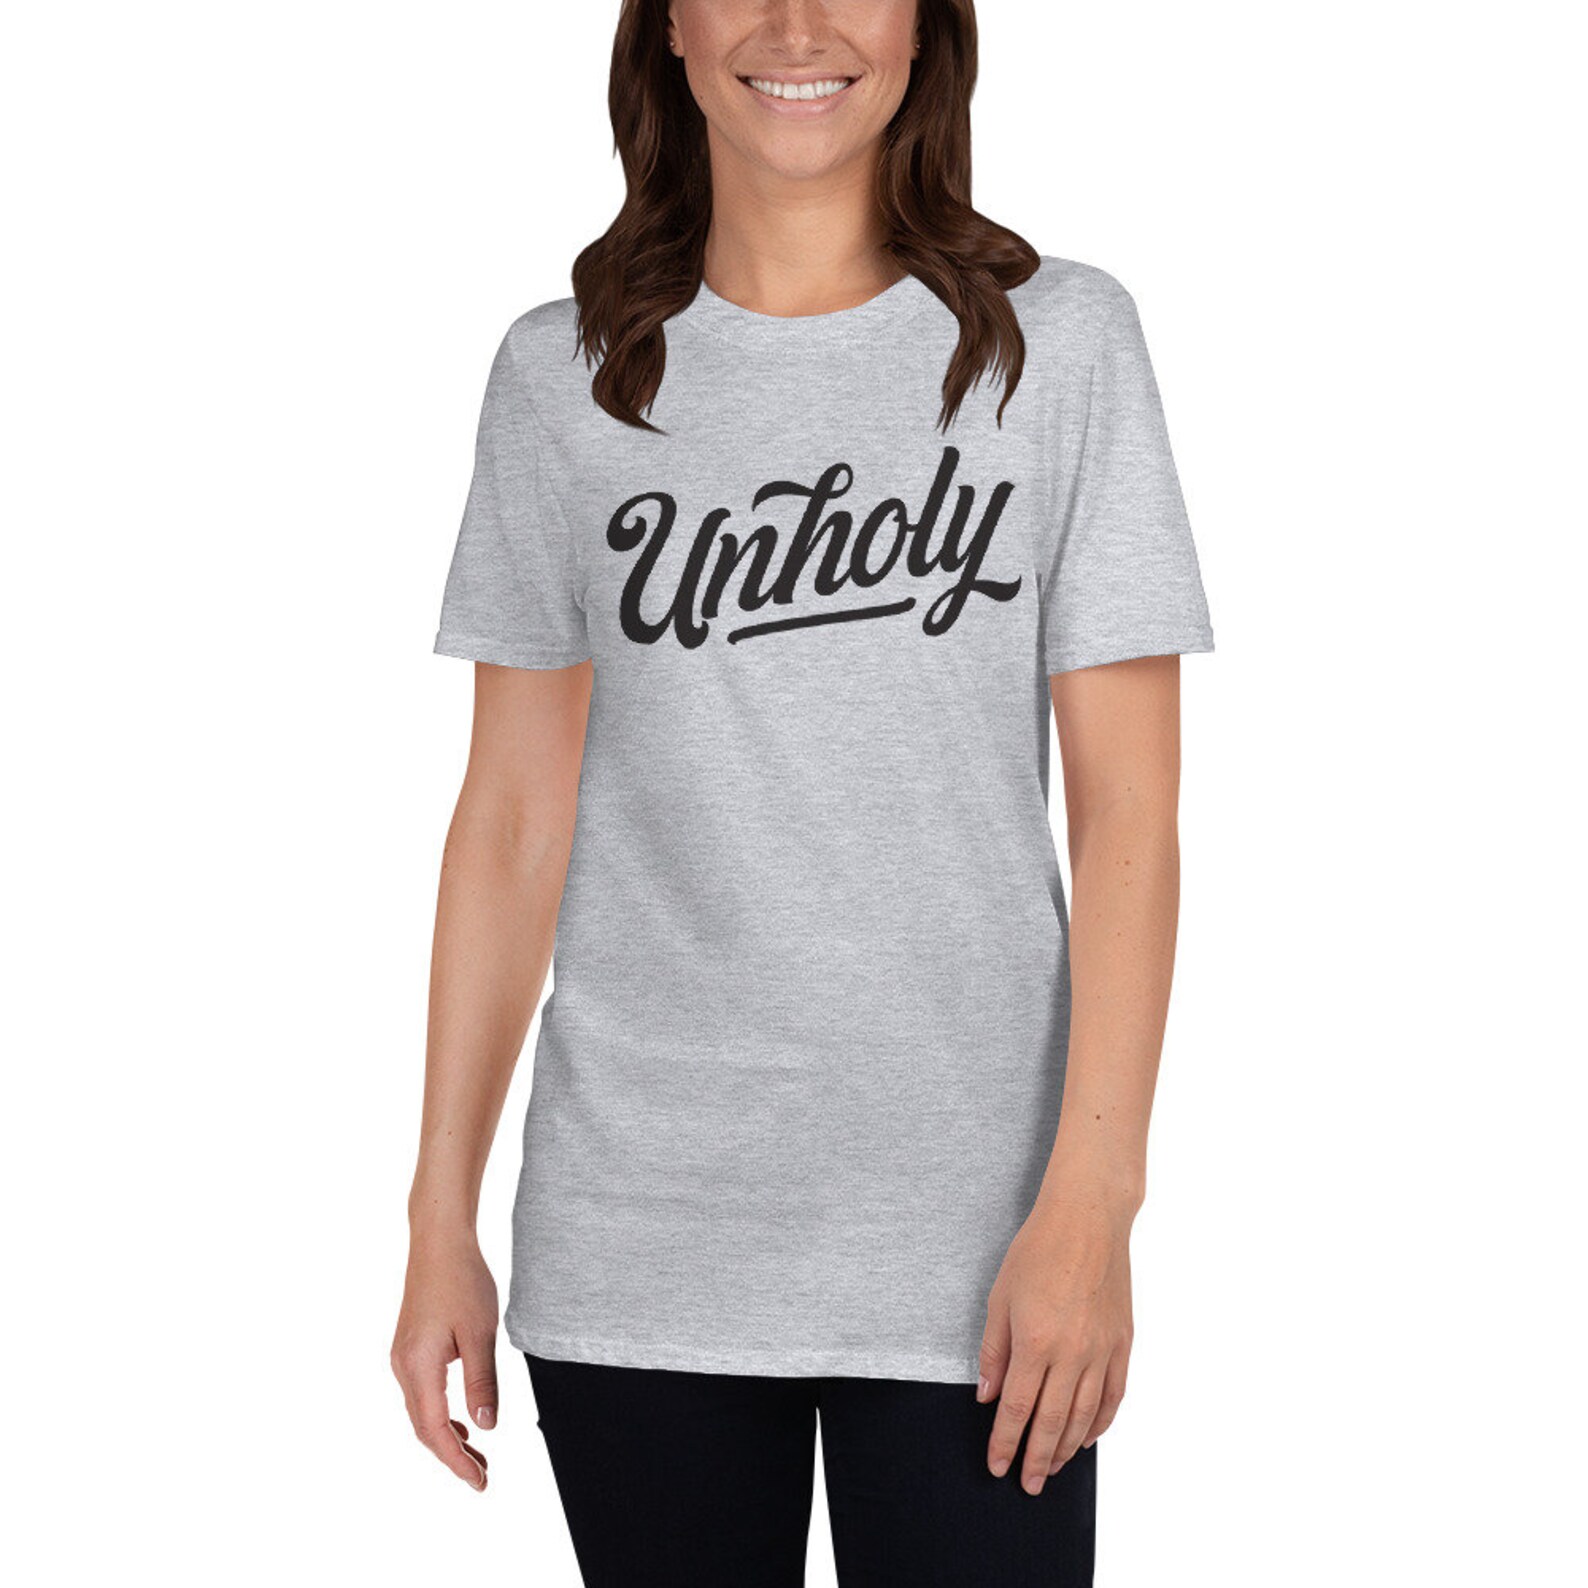 The Unholy SHIRT TEE SHIRT T Shirt Light Version for - Etsy